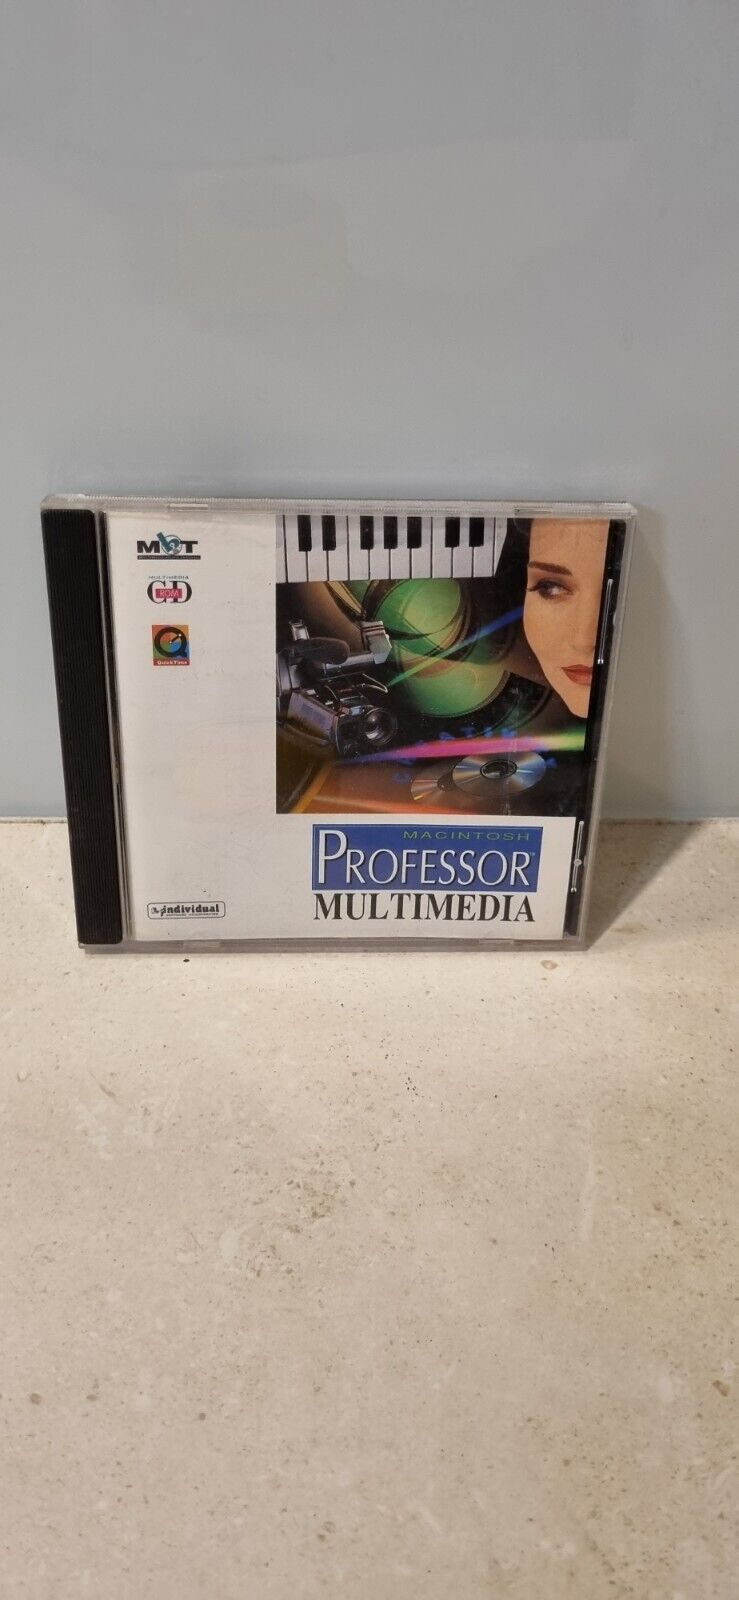 NOS Macintosh Professor Multimedia Individual Software Inc QuickTime CD-ROM 1994